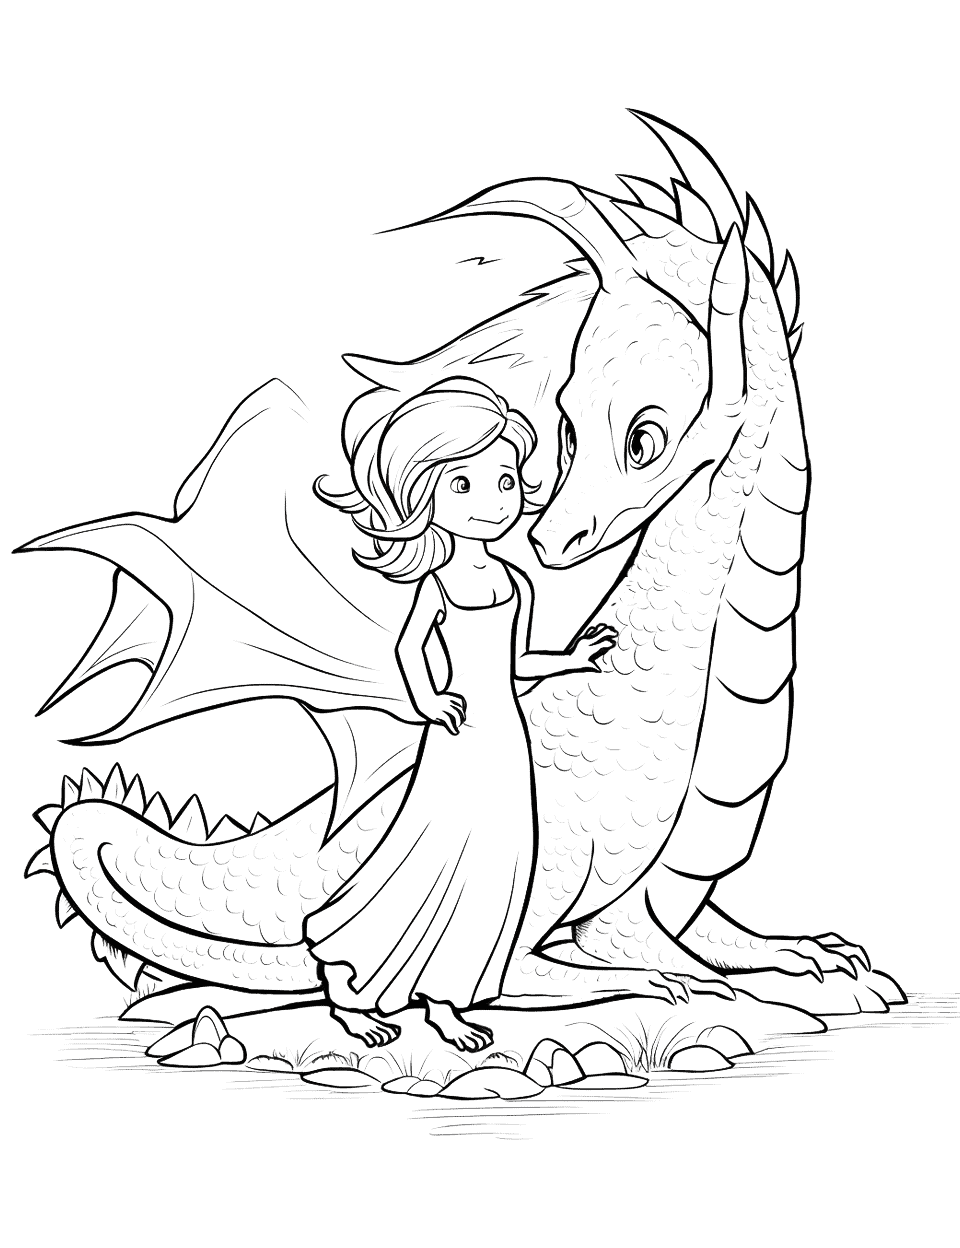 Dragon and Princess Coloring Page - A beautiful princess calmly petting a fierce dragon.